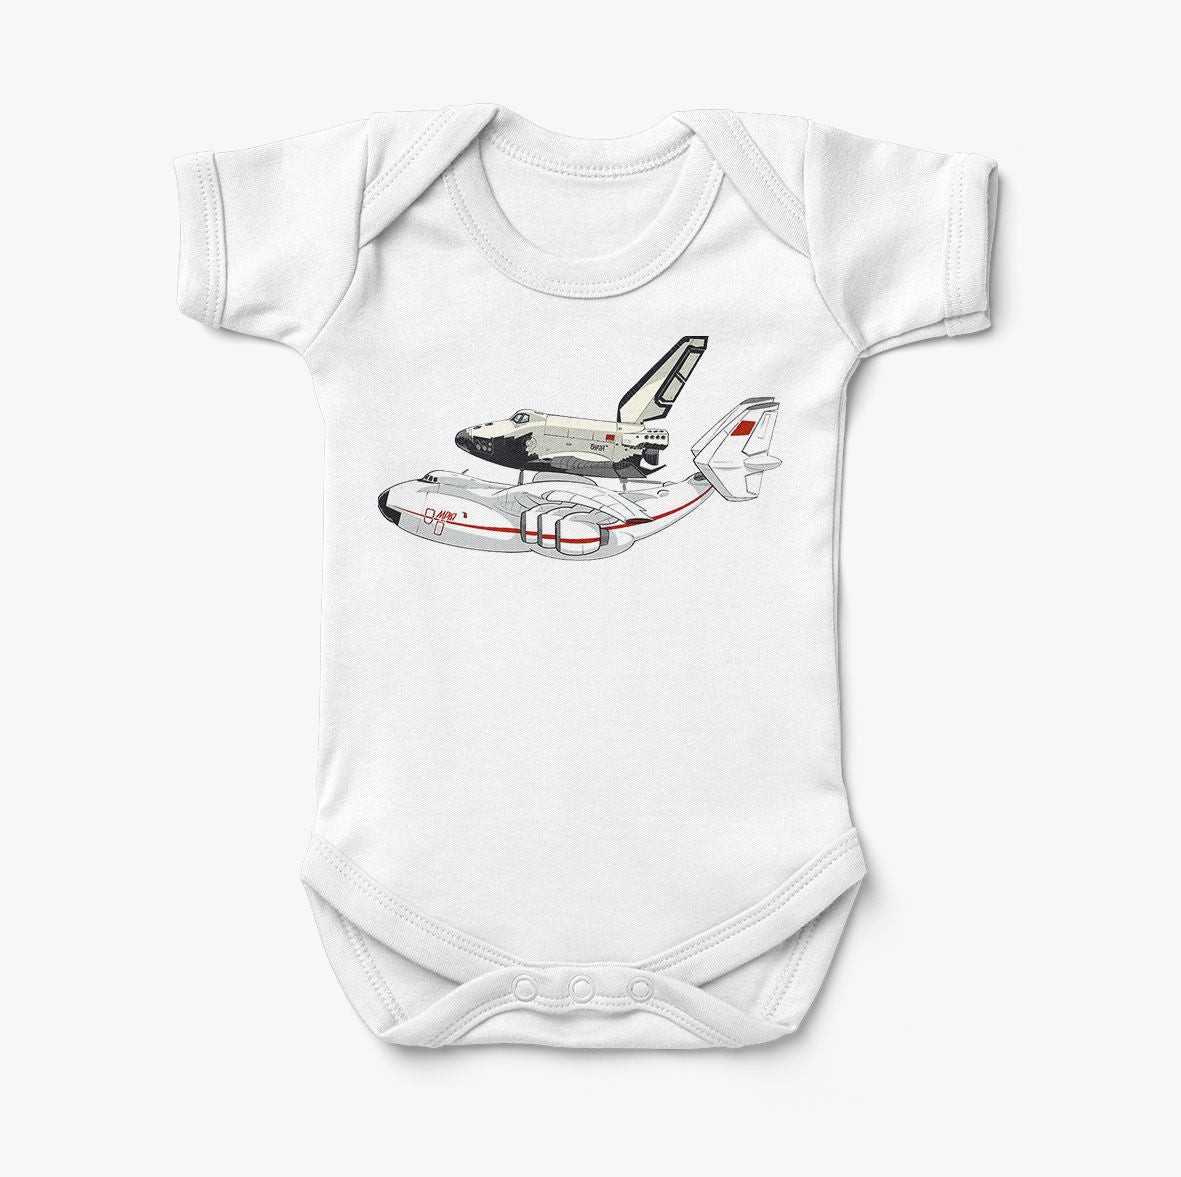 Buran & An-225 Designed Baby Bodysuits